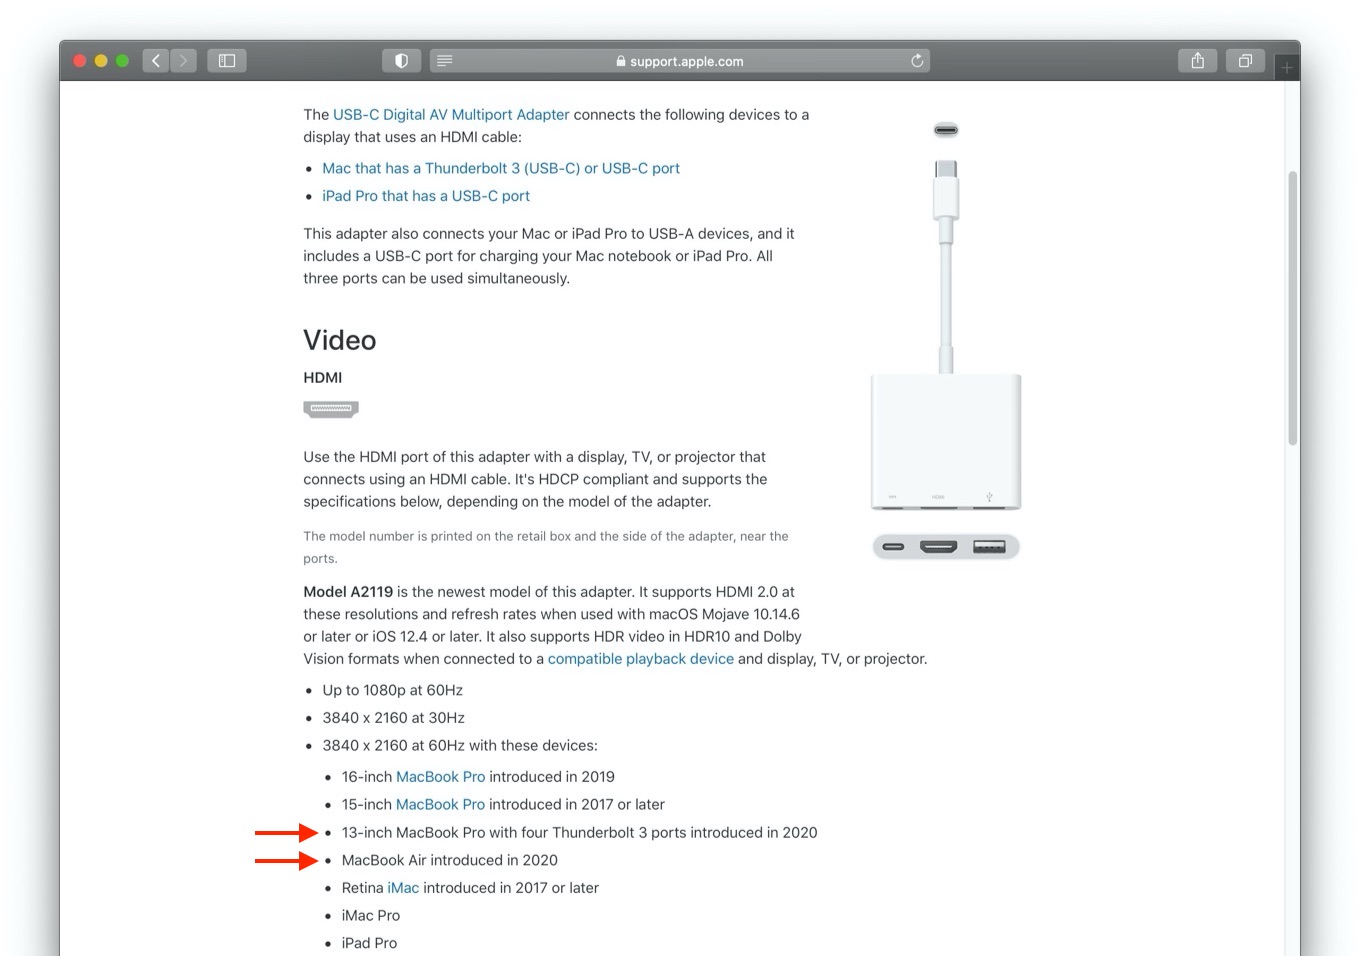 About the Apple USB-C Digital AV Multiport Adapter